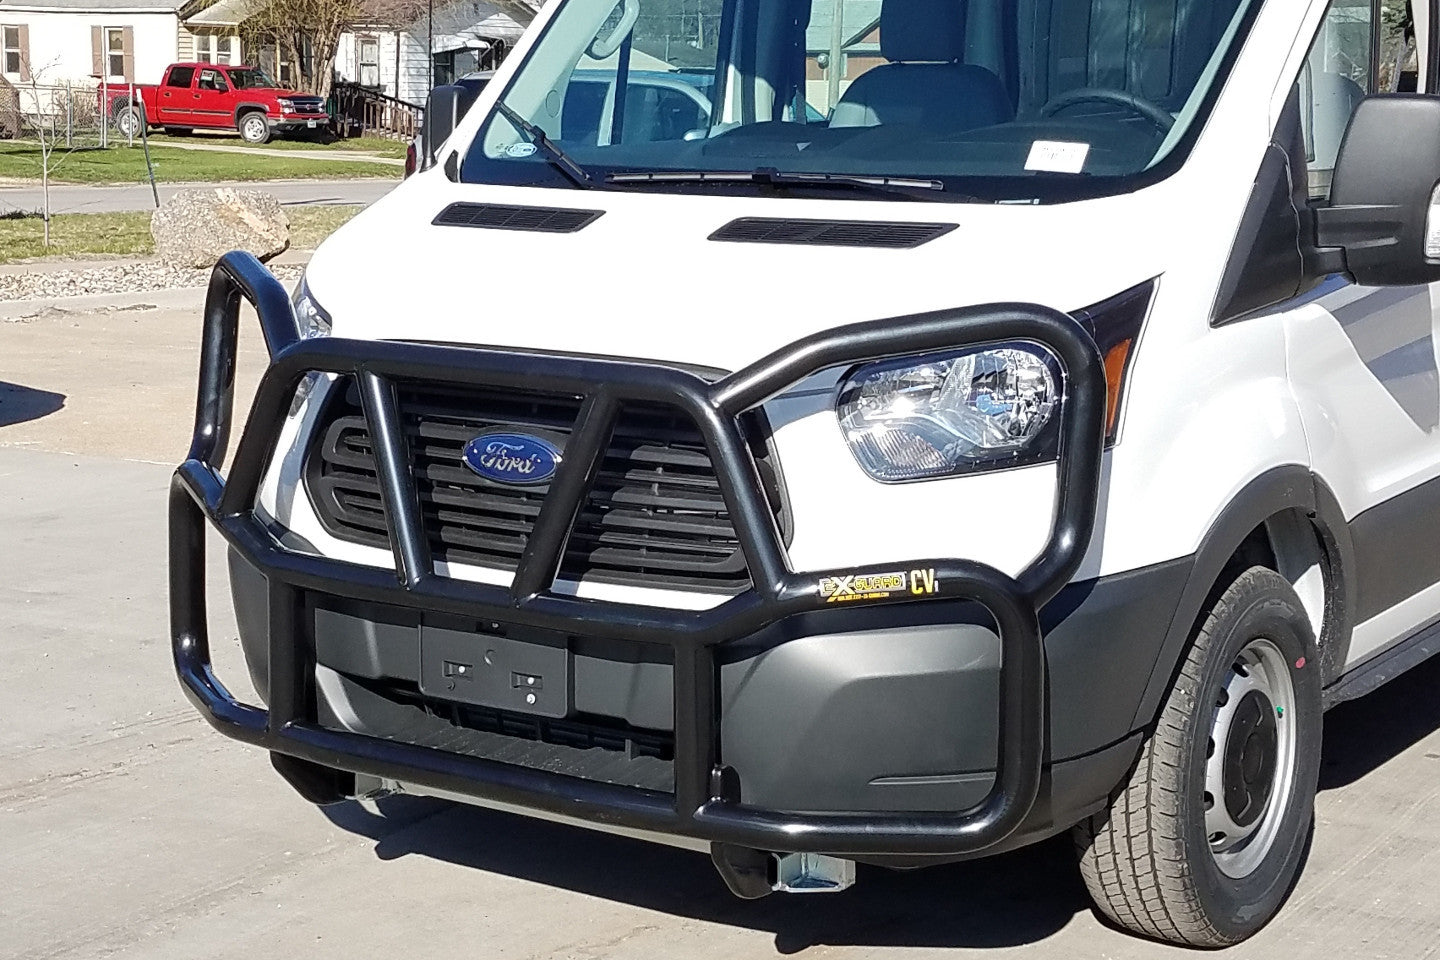 2022 Ford Nugget campervan - Caravan Guard